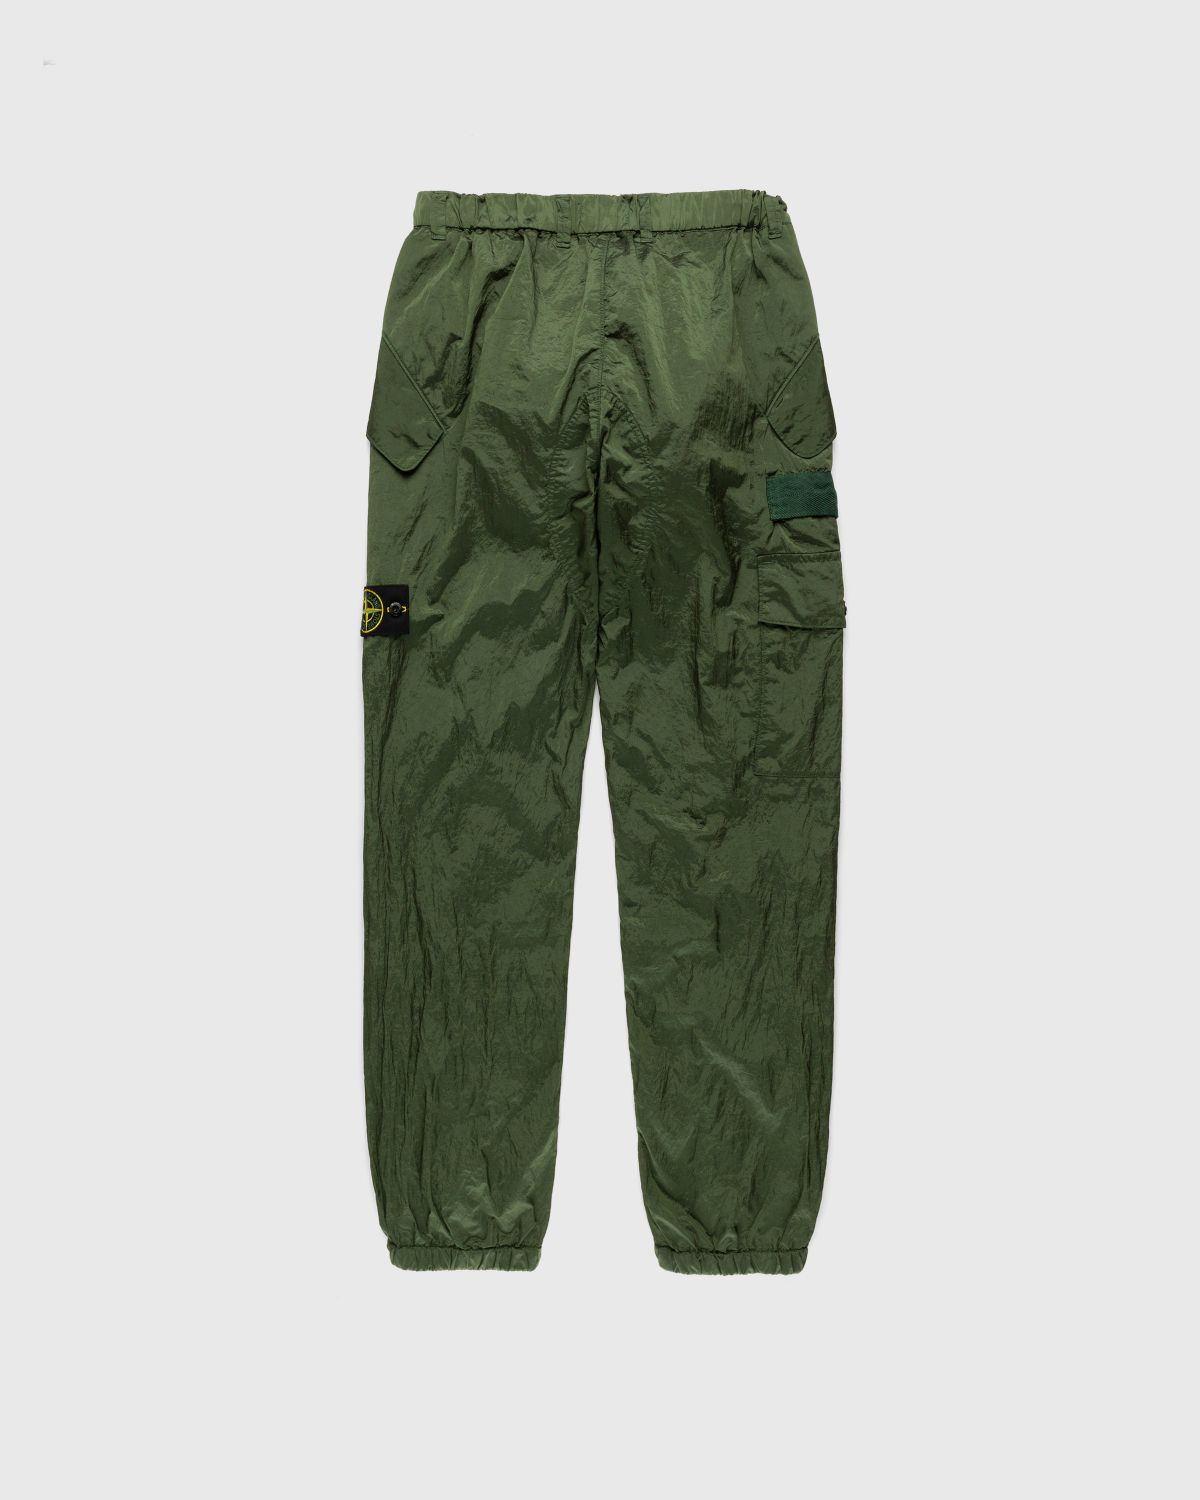 Stone Island – Nylon Metal Cargo Pants Olive - Pants - Green - Image 2